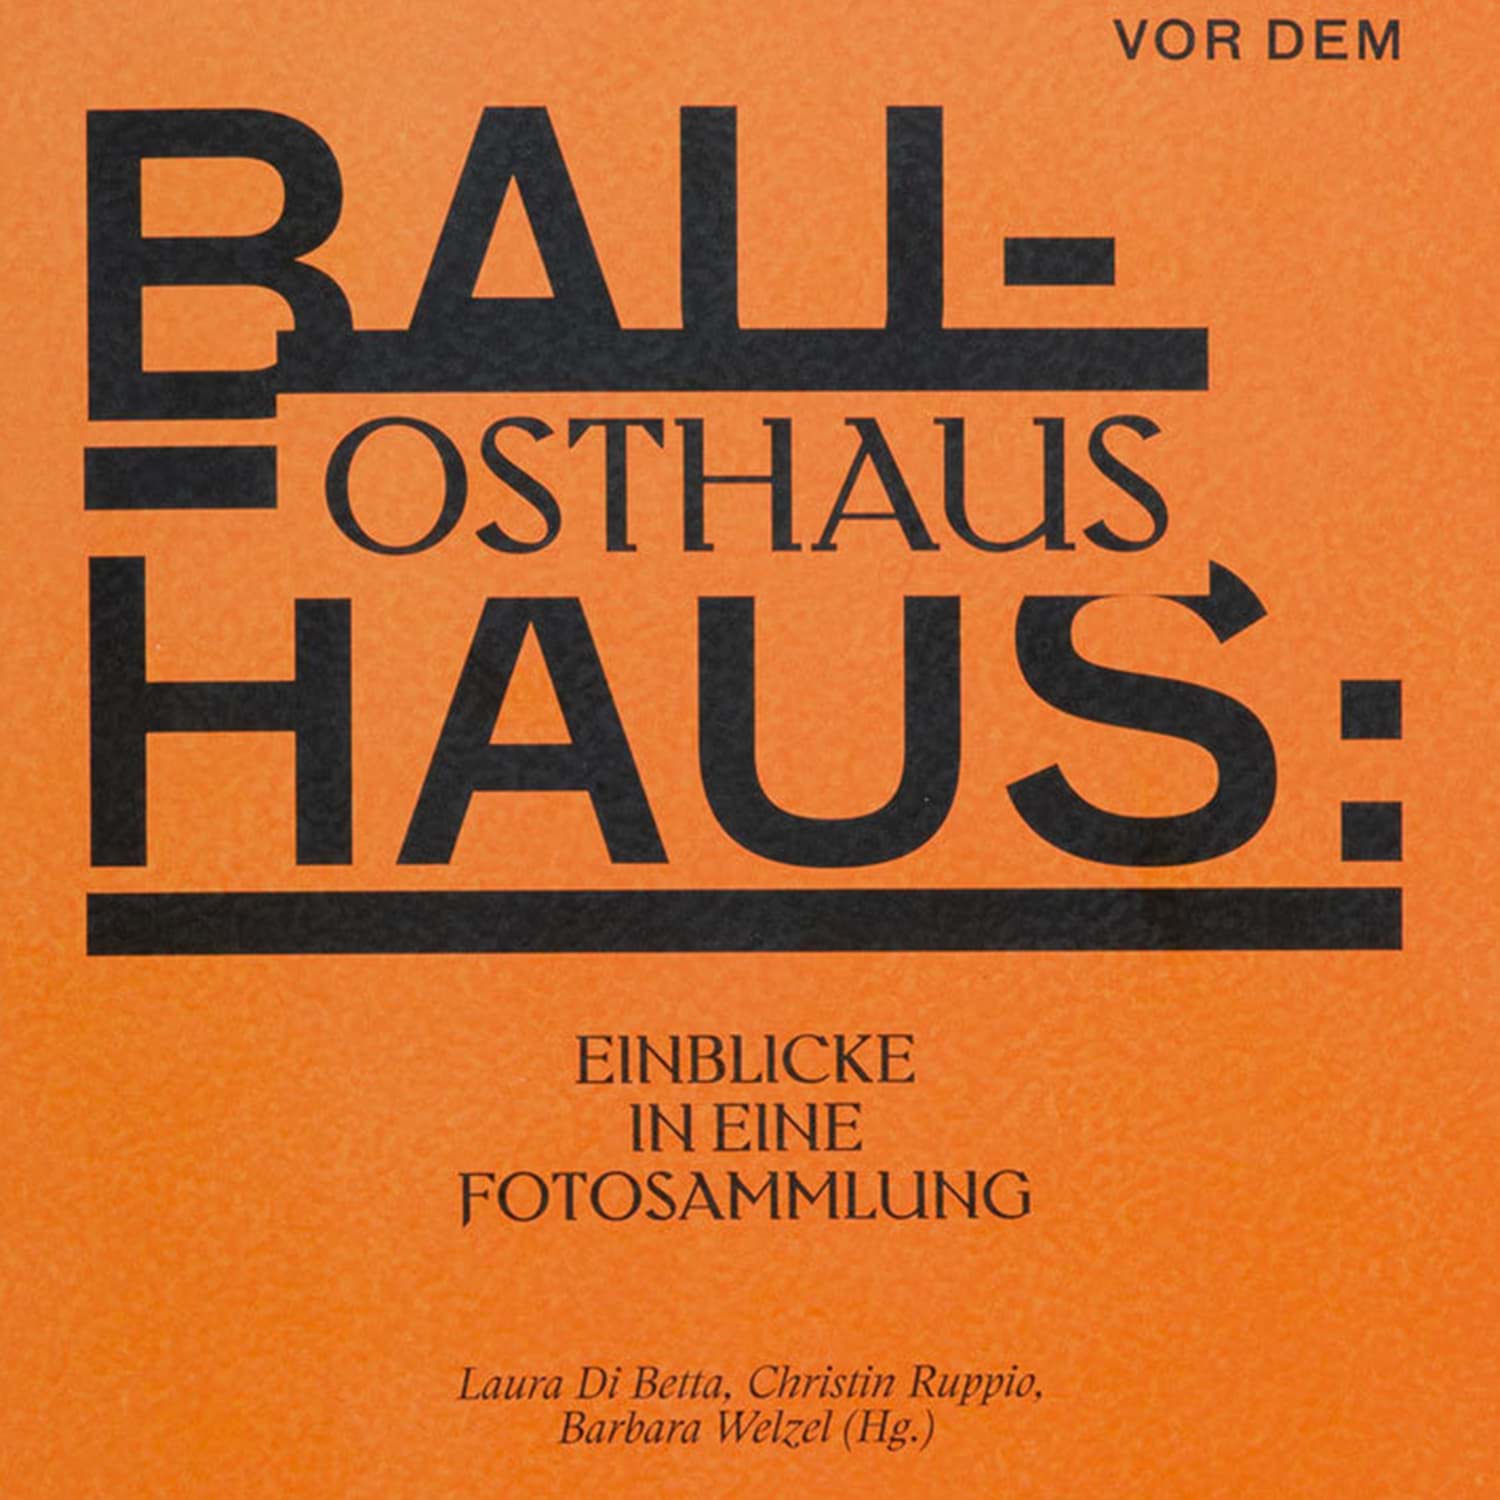 Vor dem Bauhaus: Osthaus resmi